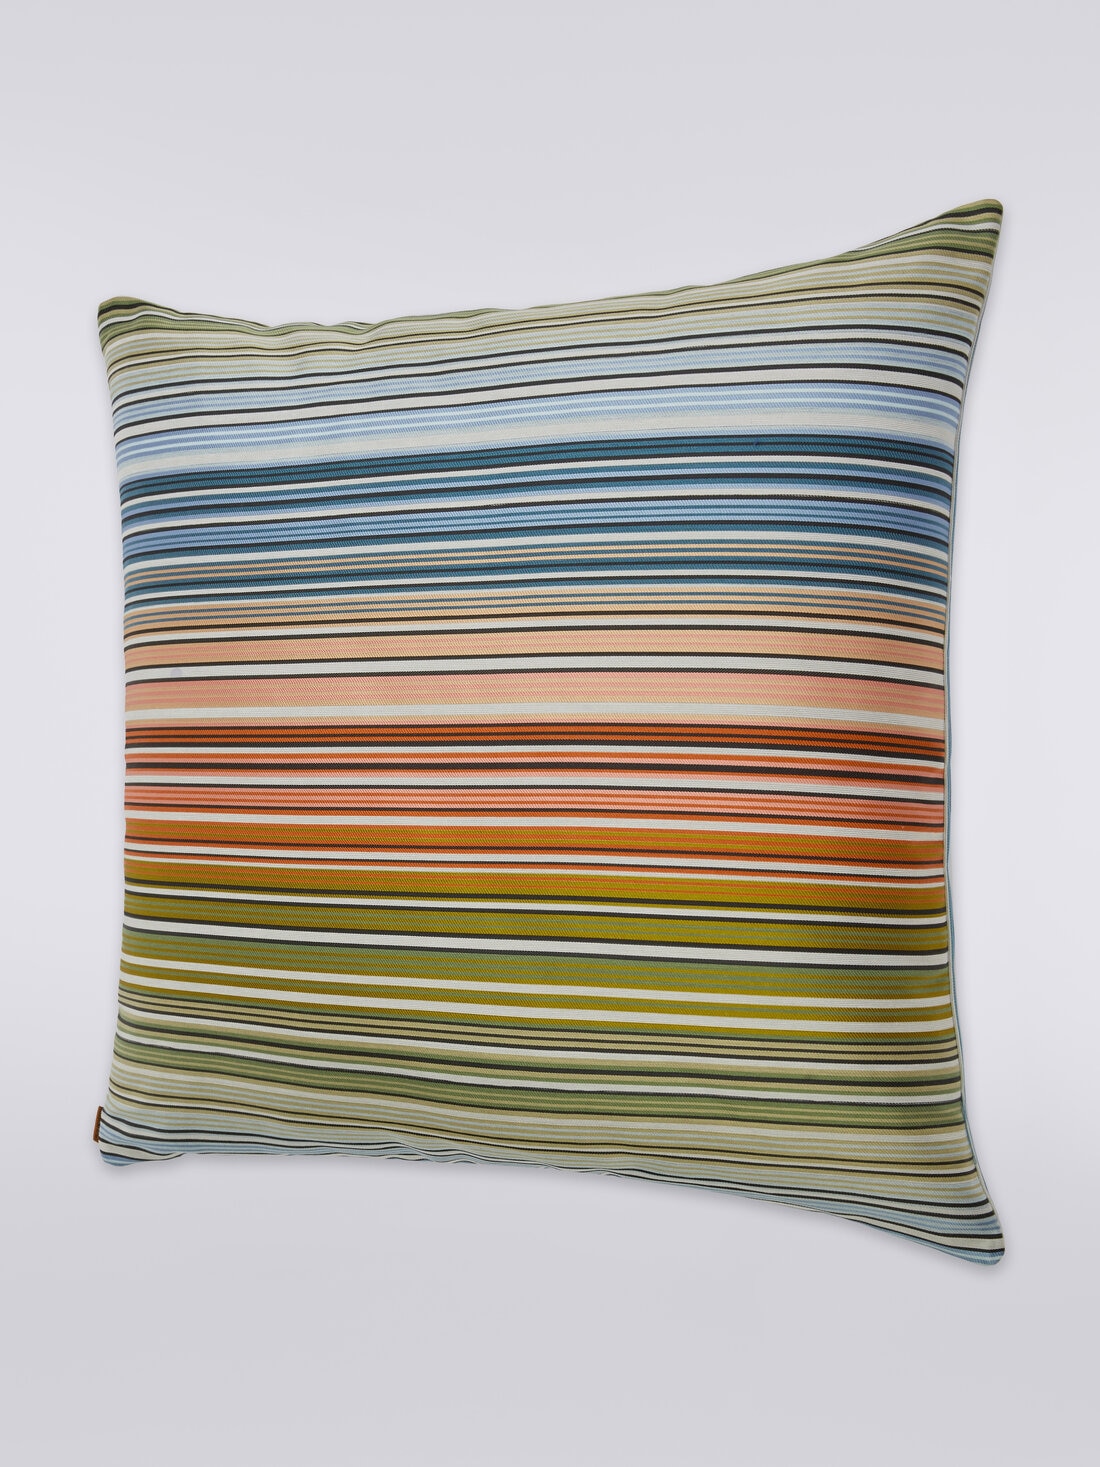 Brighton cushion 60x60 cm, Multicoloured  - 8051275607465 - 1